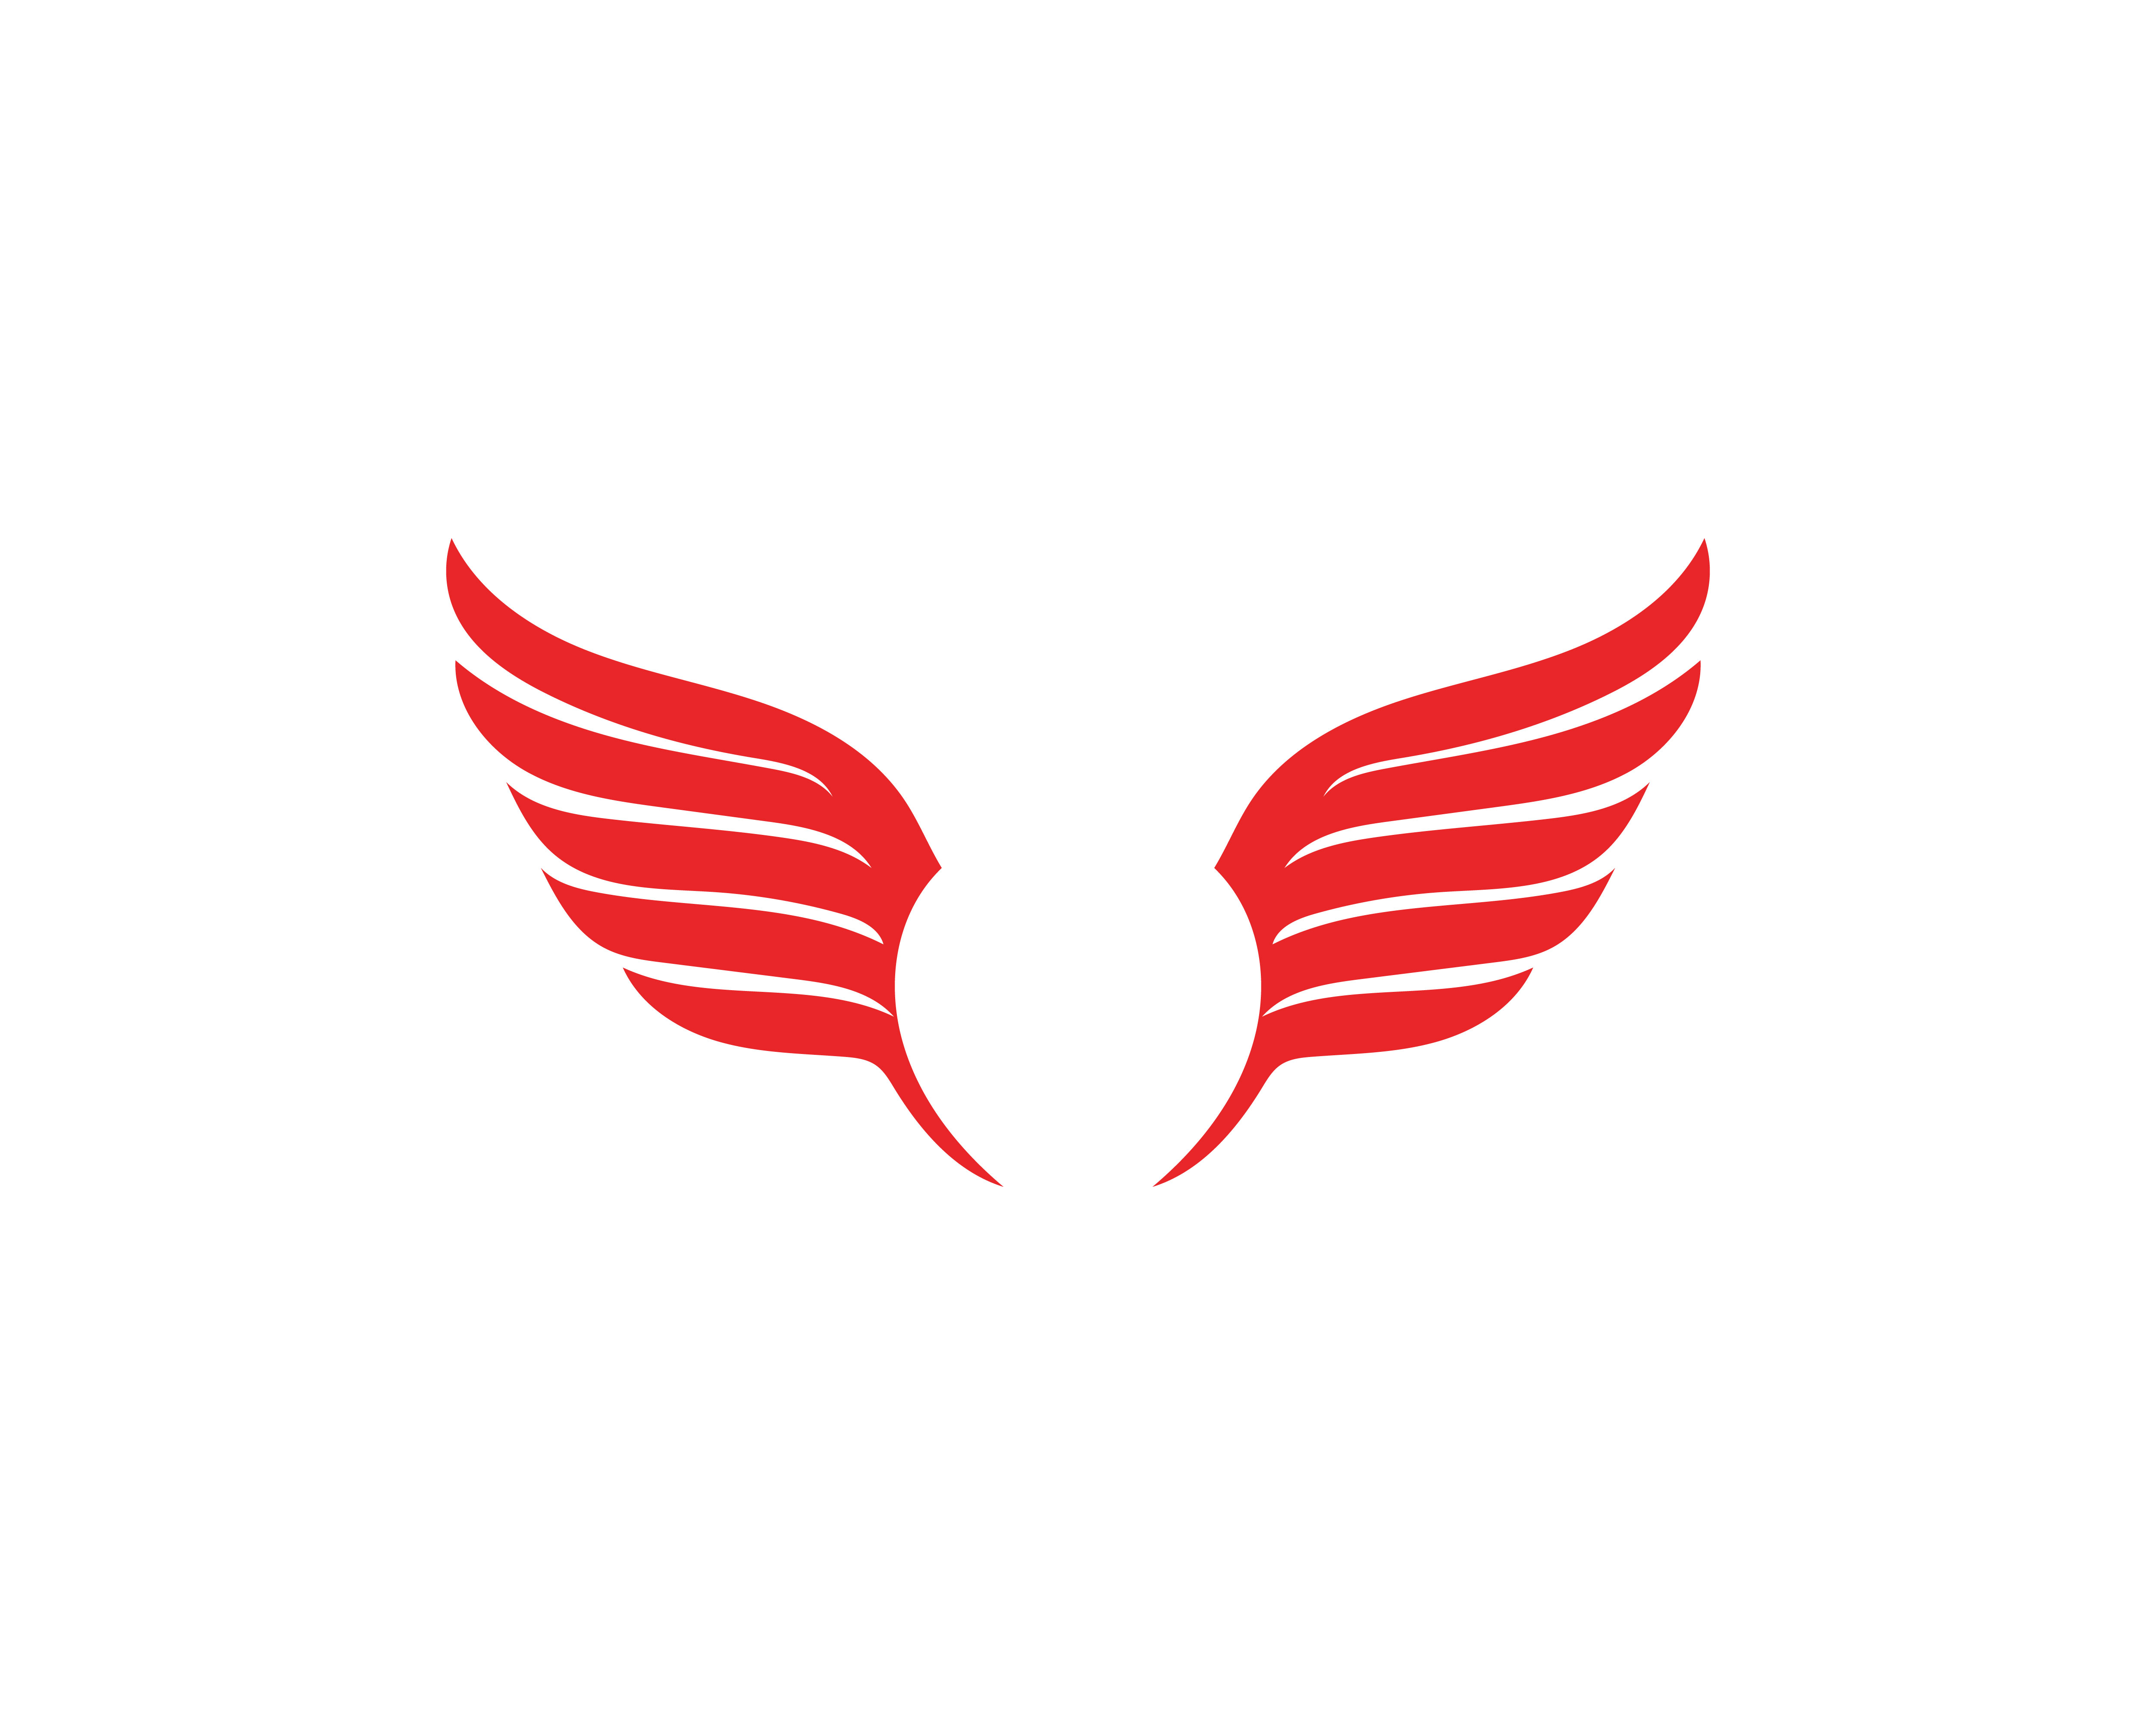 Falcon Wing Logo Template vector icon 580619 - Download Free Vectors